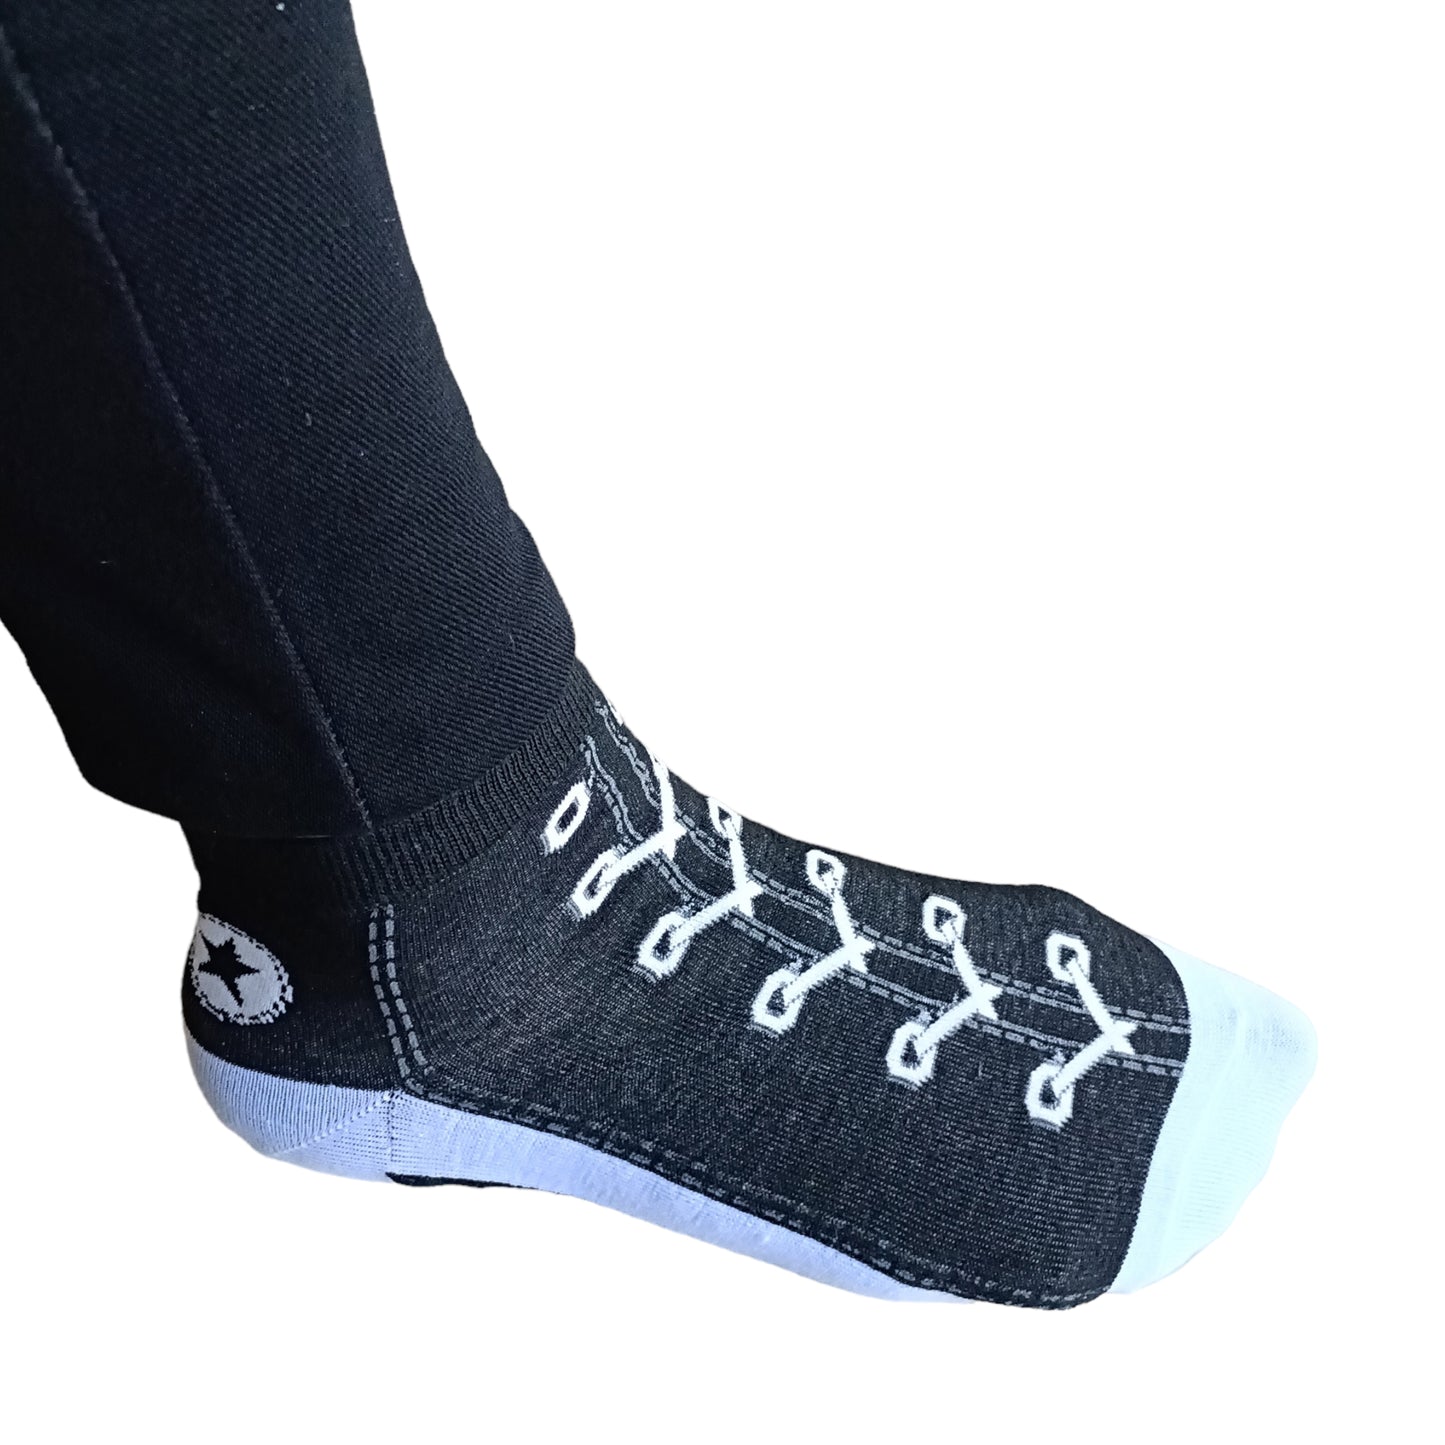 Silly Socks - Shoes Printed Socks